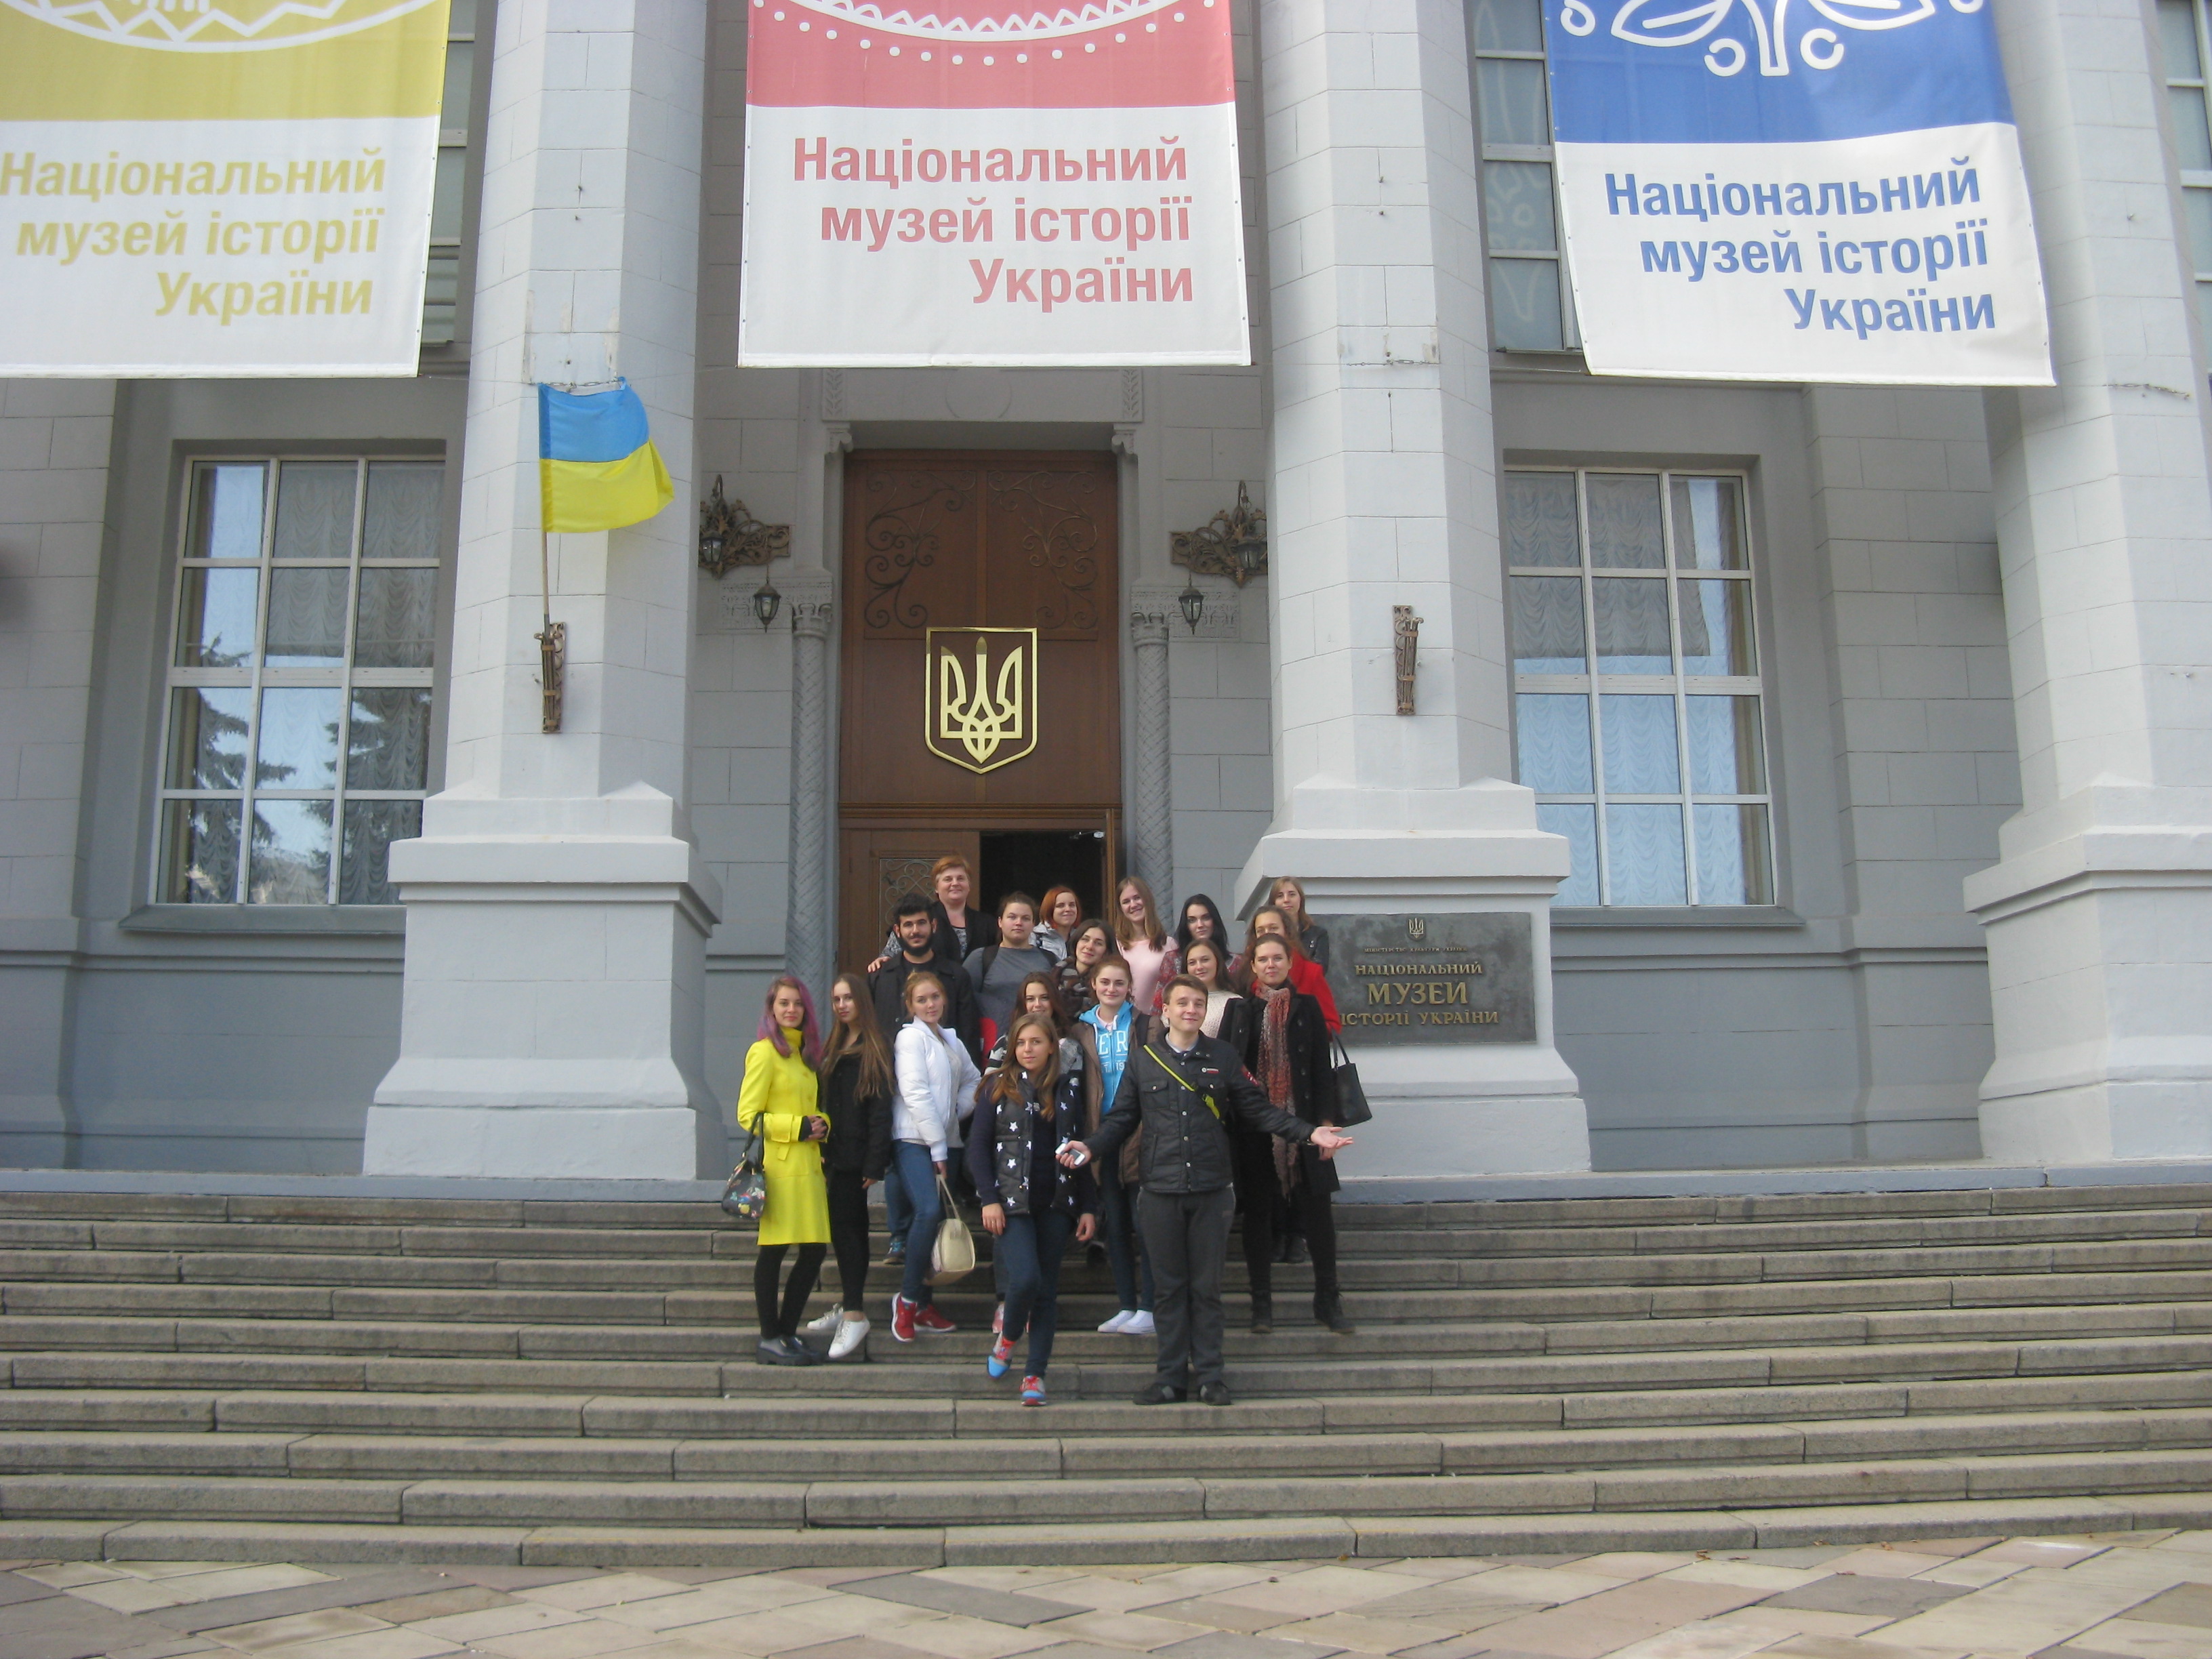 National museum of Ukraine5